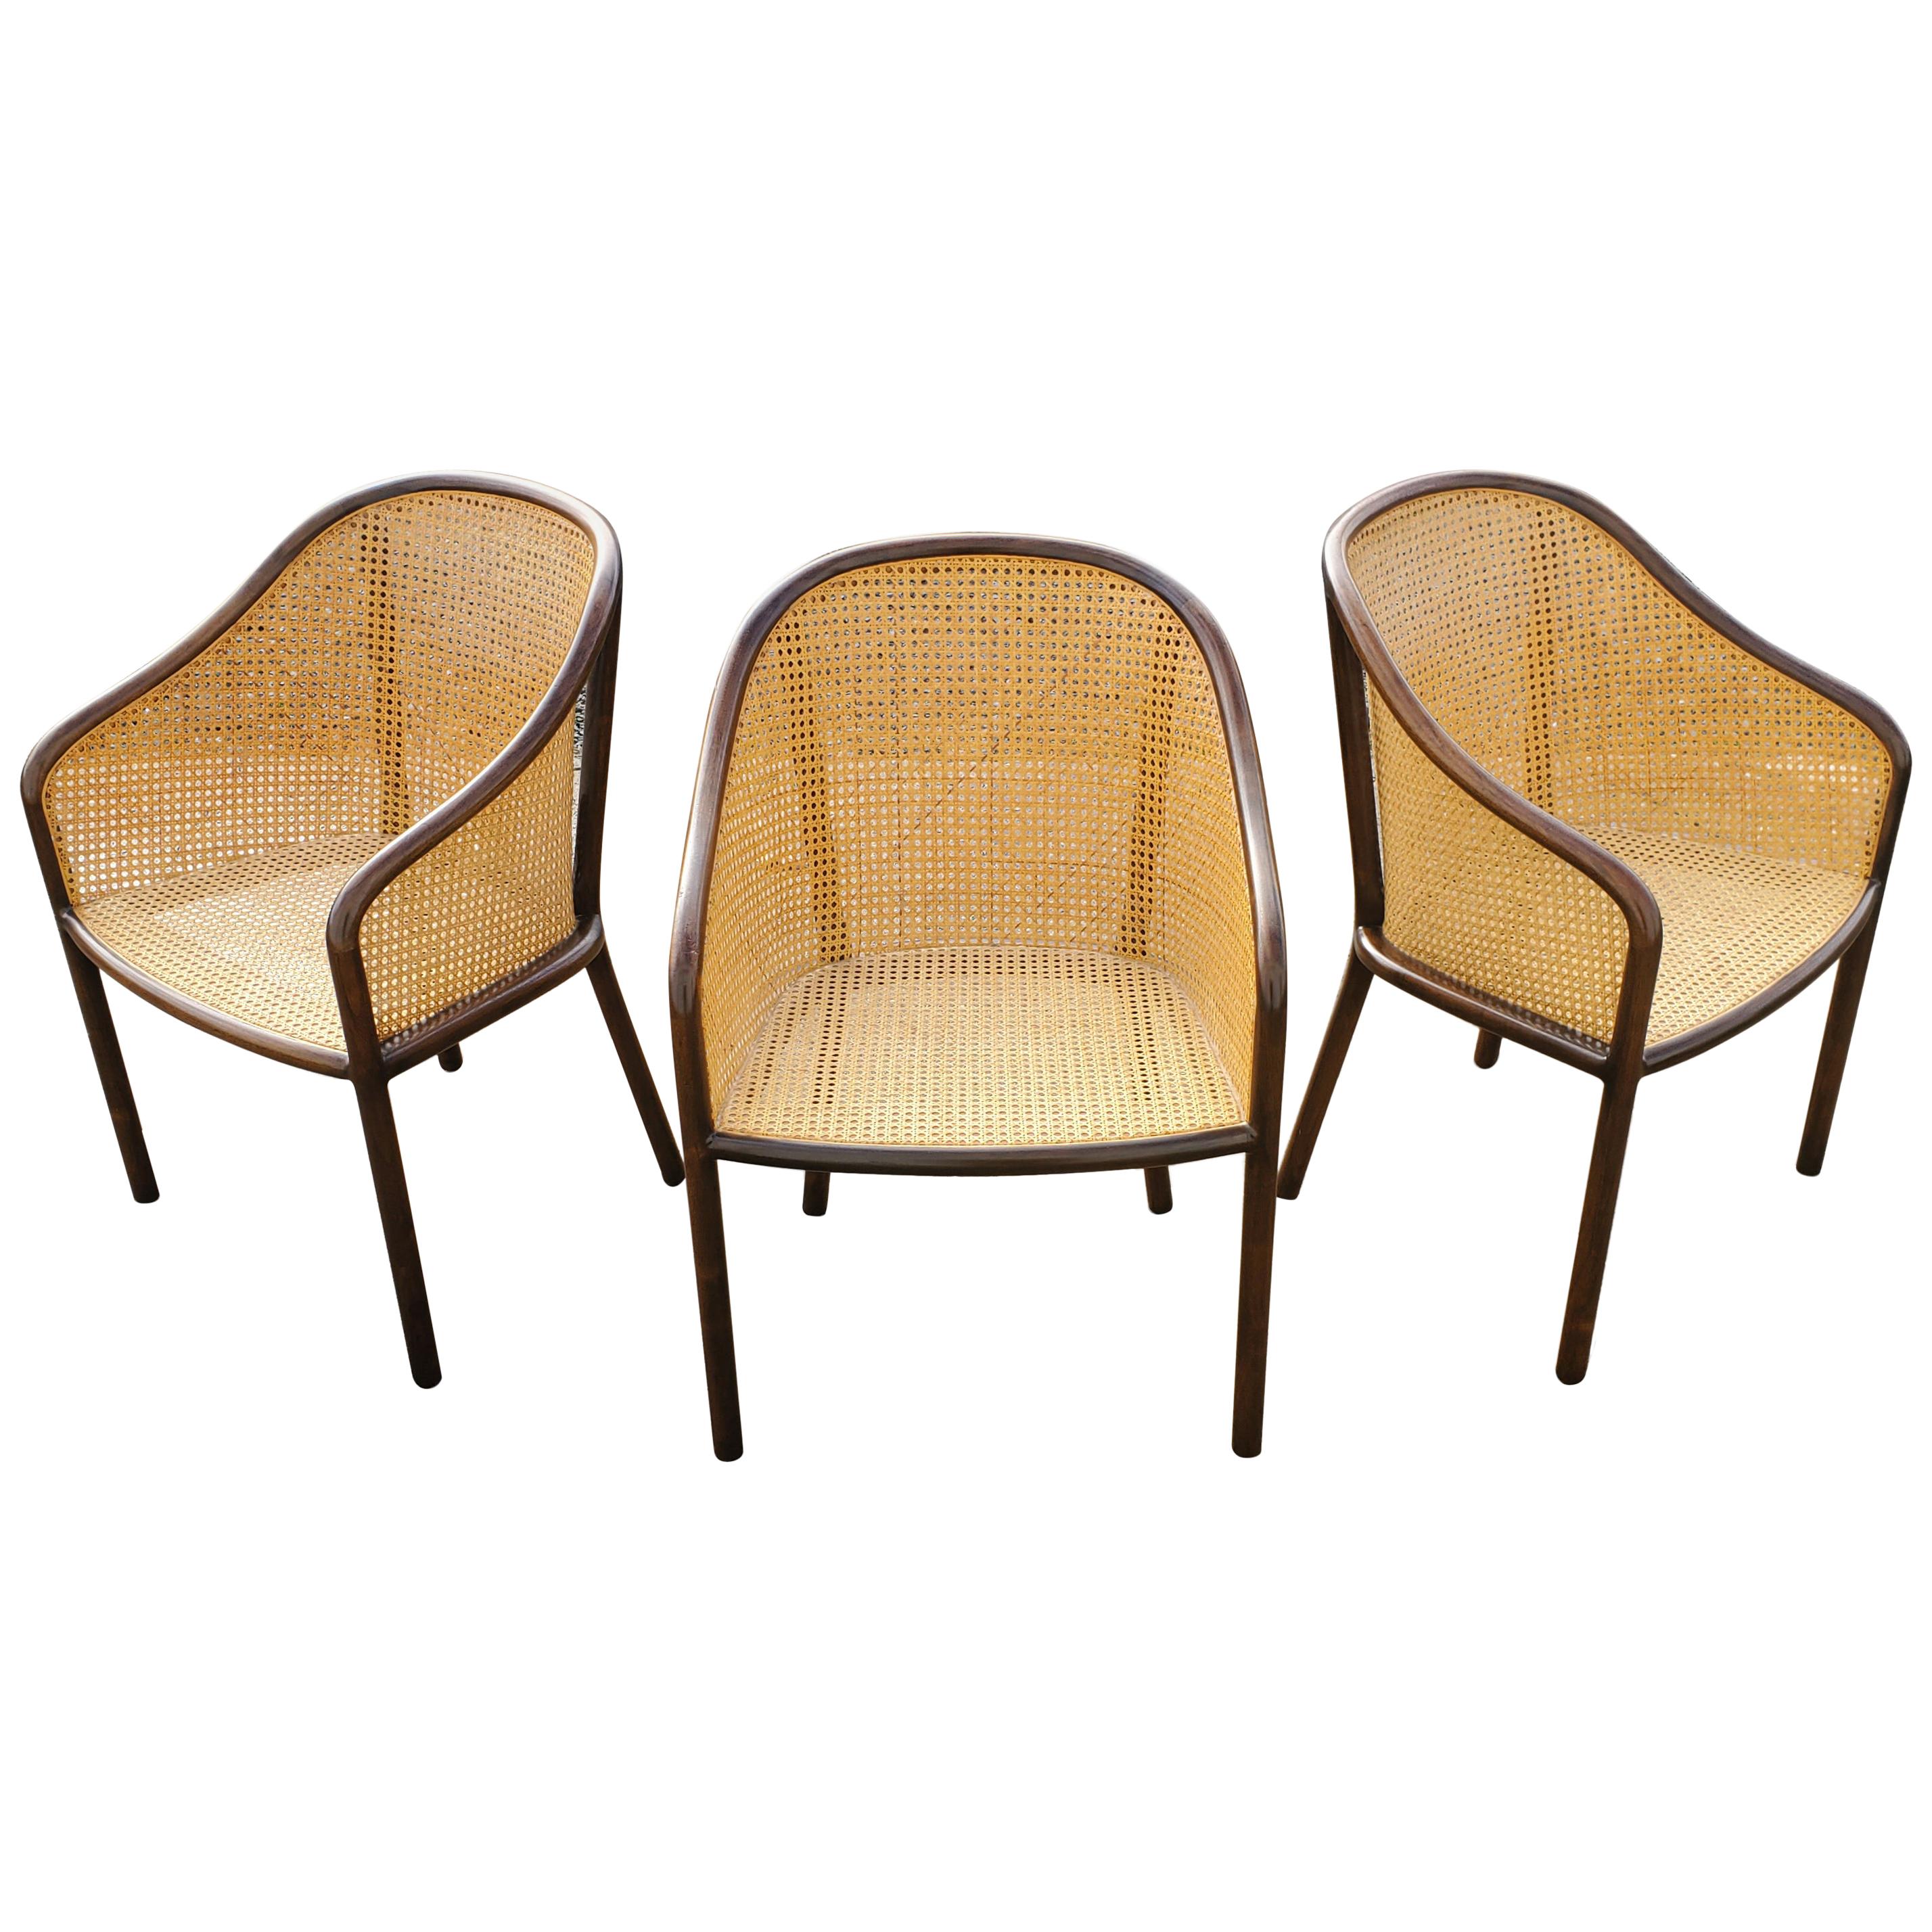 Set of Three Ward Bennett Chairs for Brickel